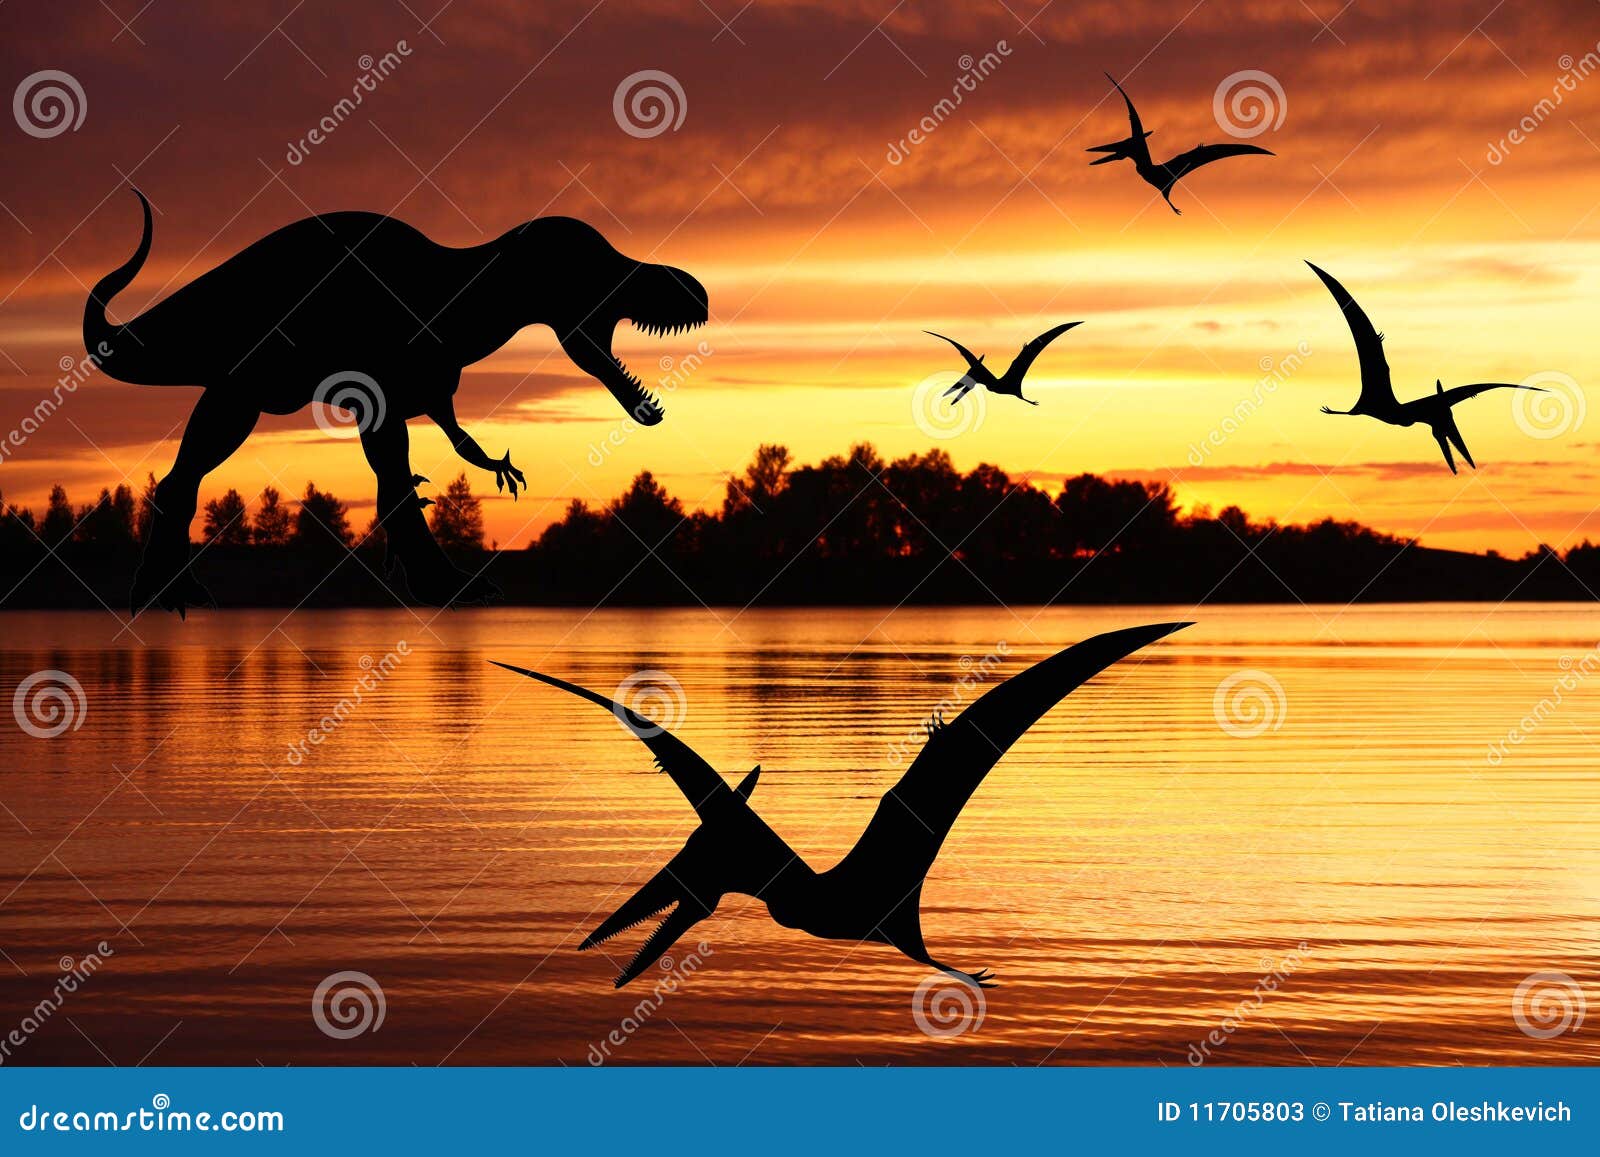 550 Pterodactyl Dinosaur Stock Photos - Free & Royalty-Free Stock Photos  from Dreamstime